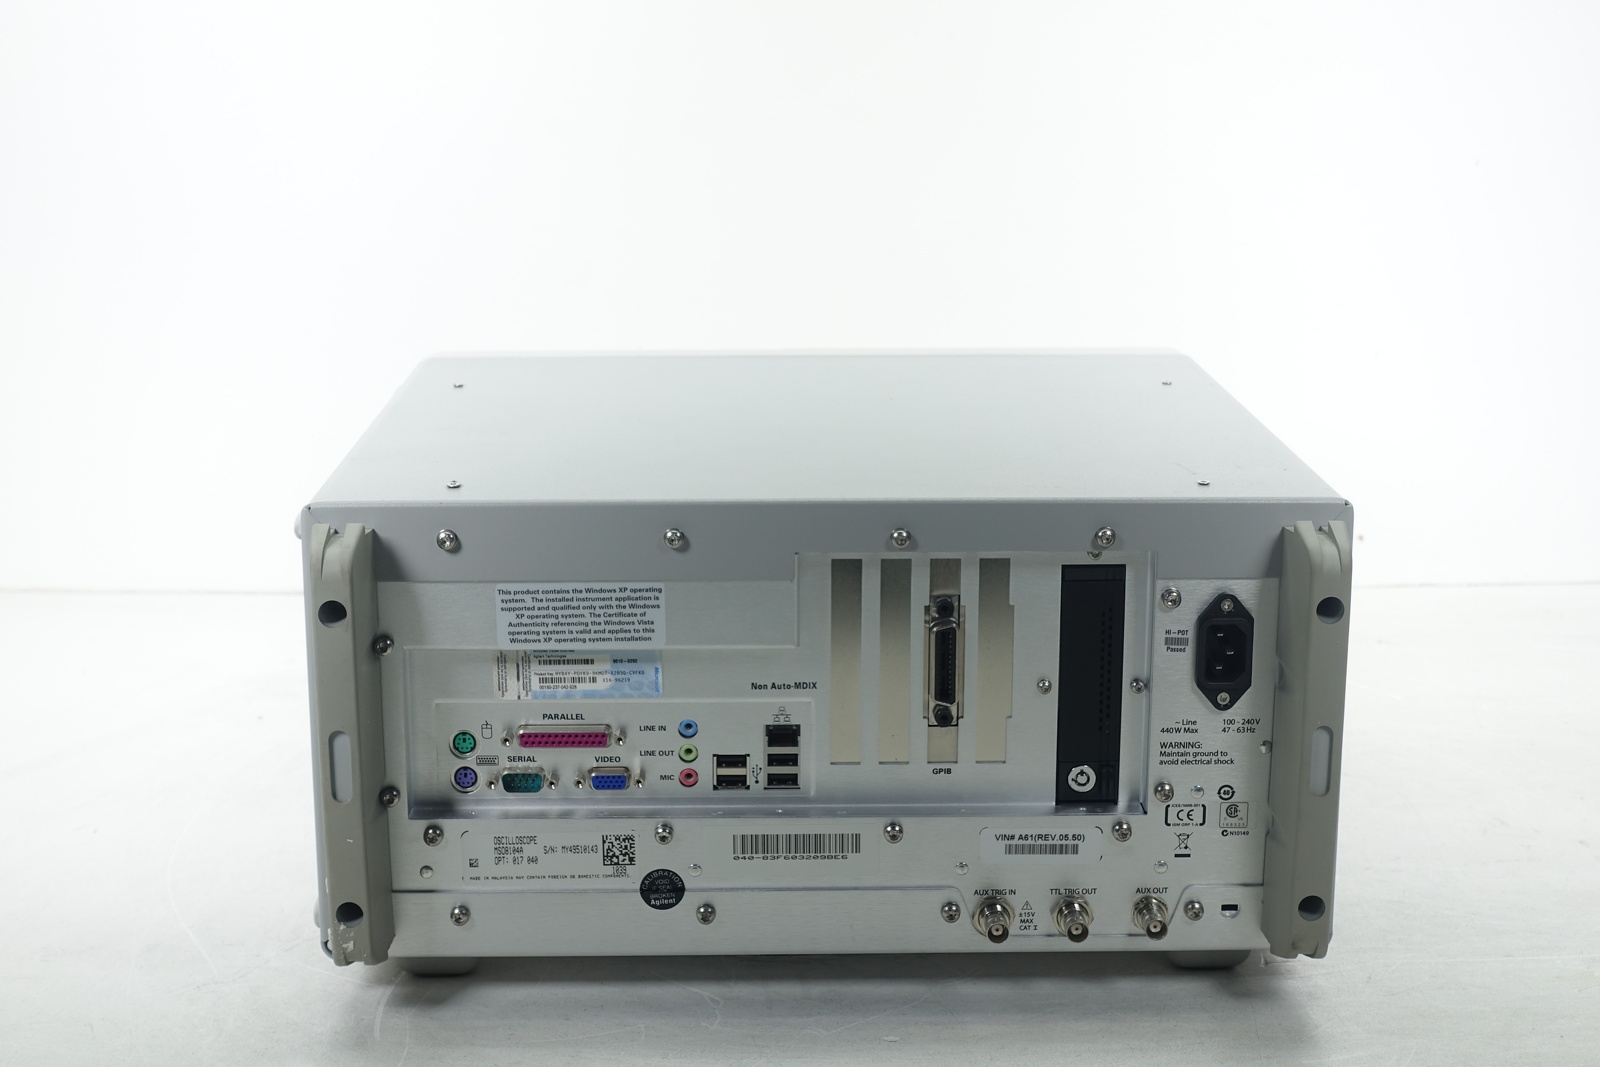 Keysight MSO8104A Infiniium Mixed Signal Oscilloscope / 1 GHz / 4 Scope and 16 Digital Channels